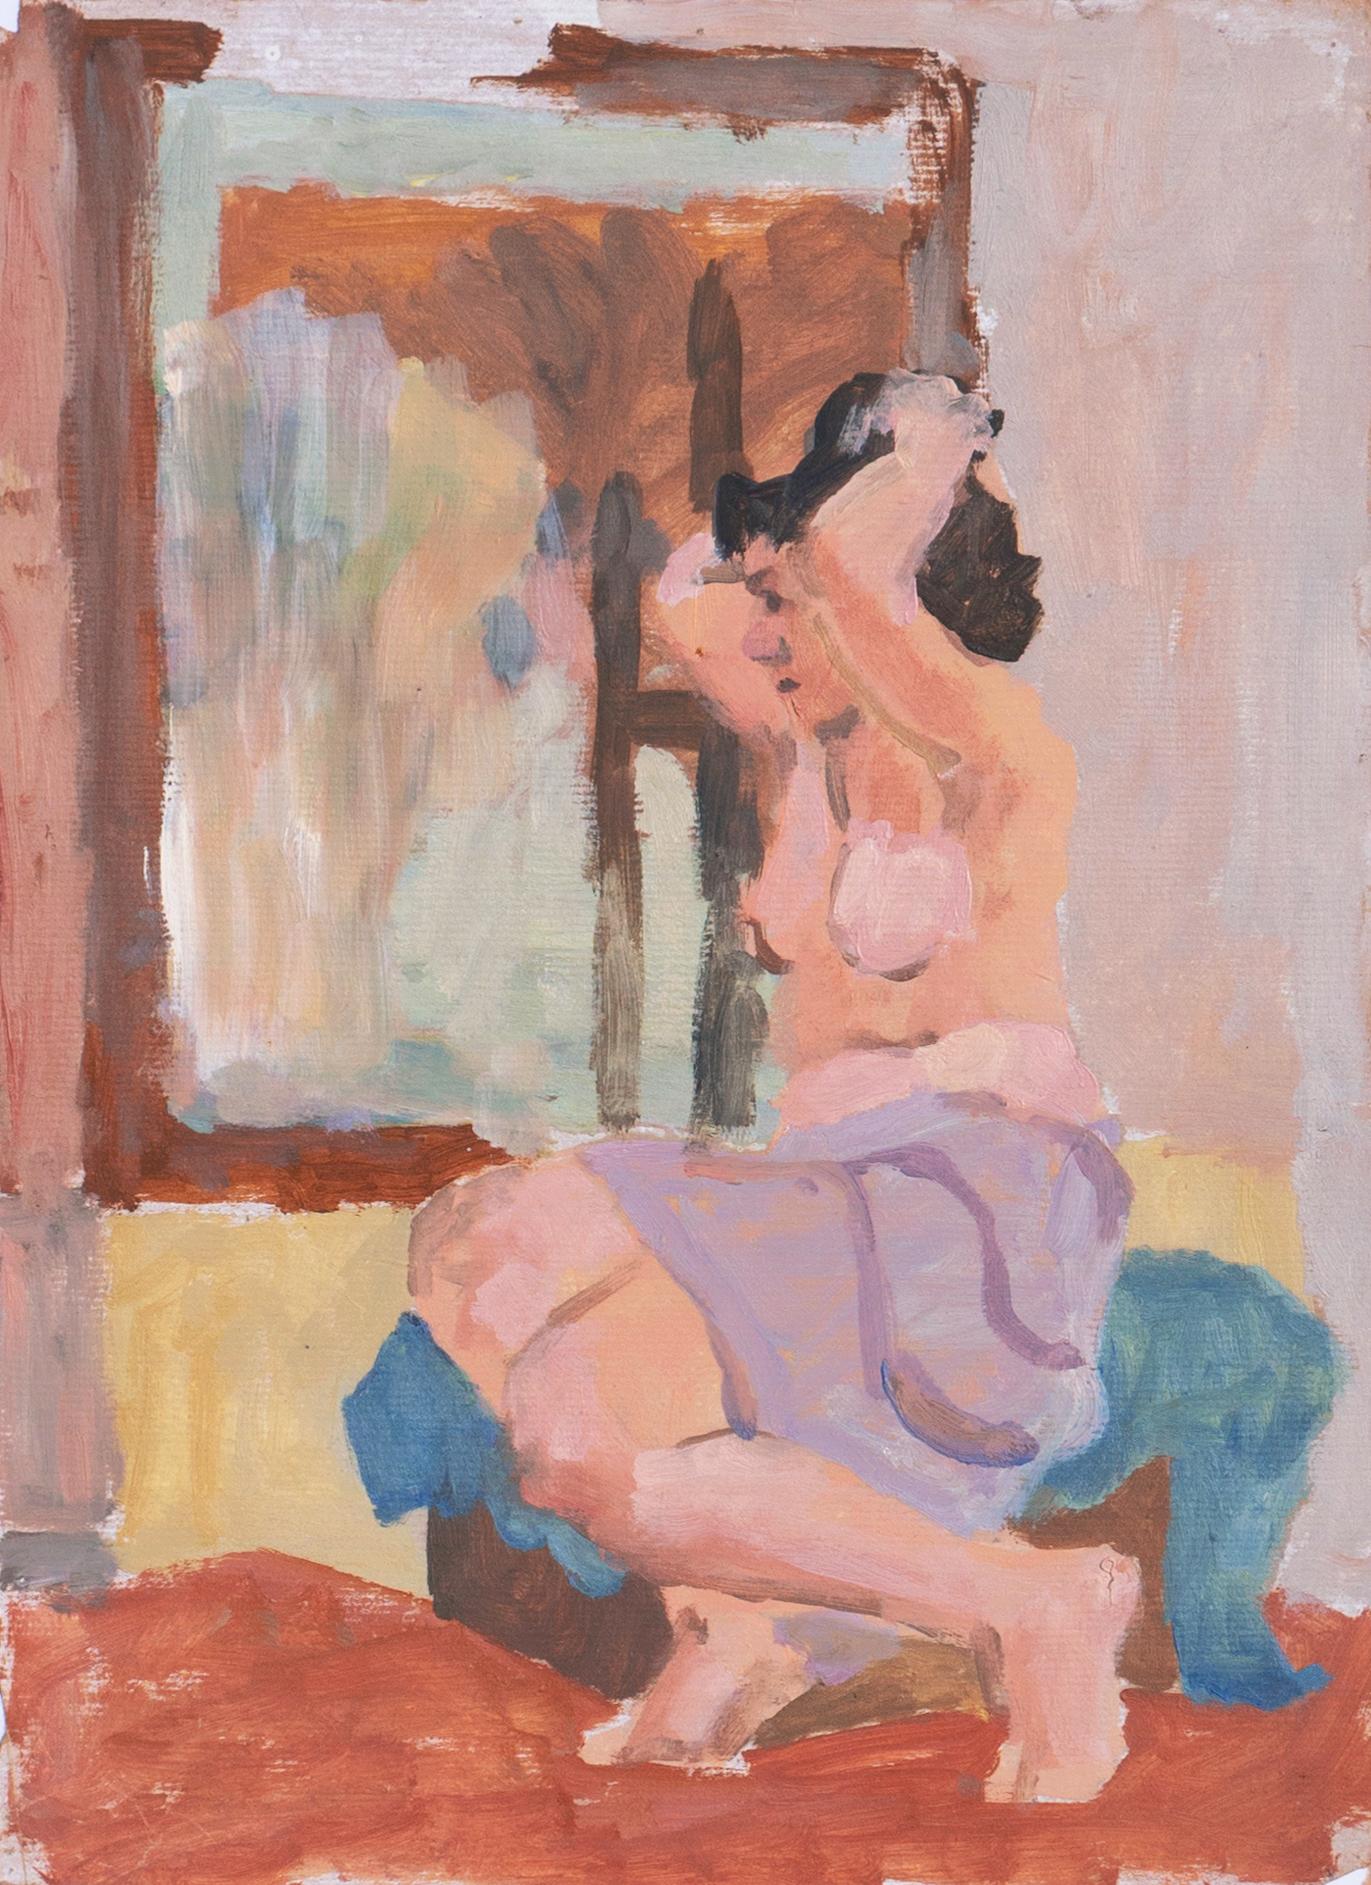 Victor Di Gesu Nude Painting - 'Nude by a Mirror', Paris, Louvre, Académie Chaumière, California, LACMA, SFAA